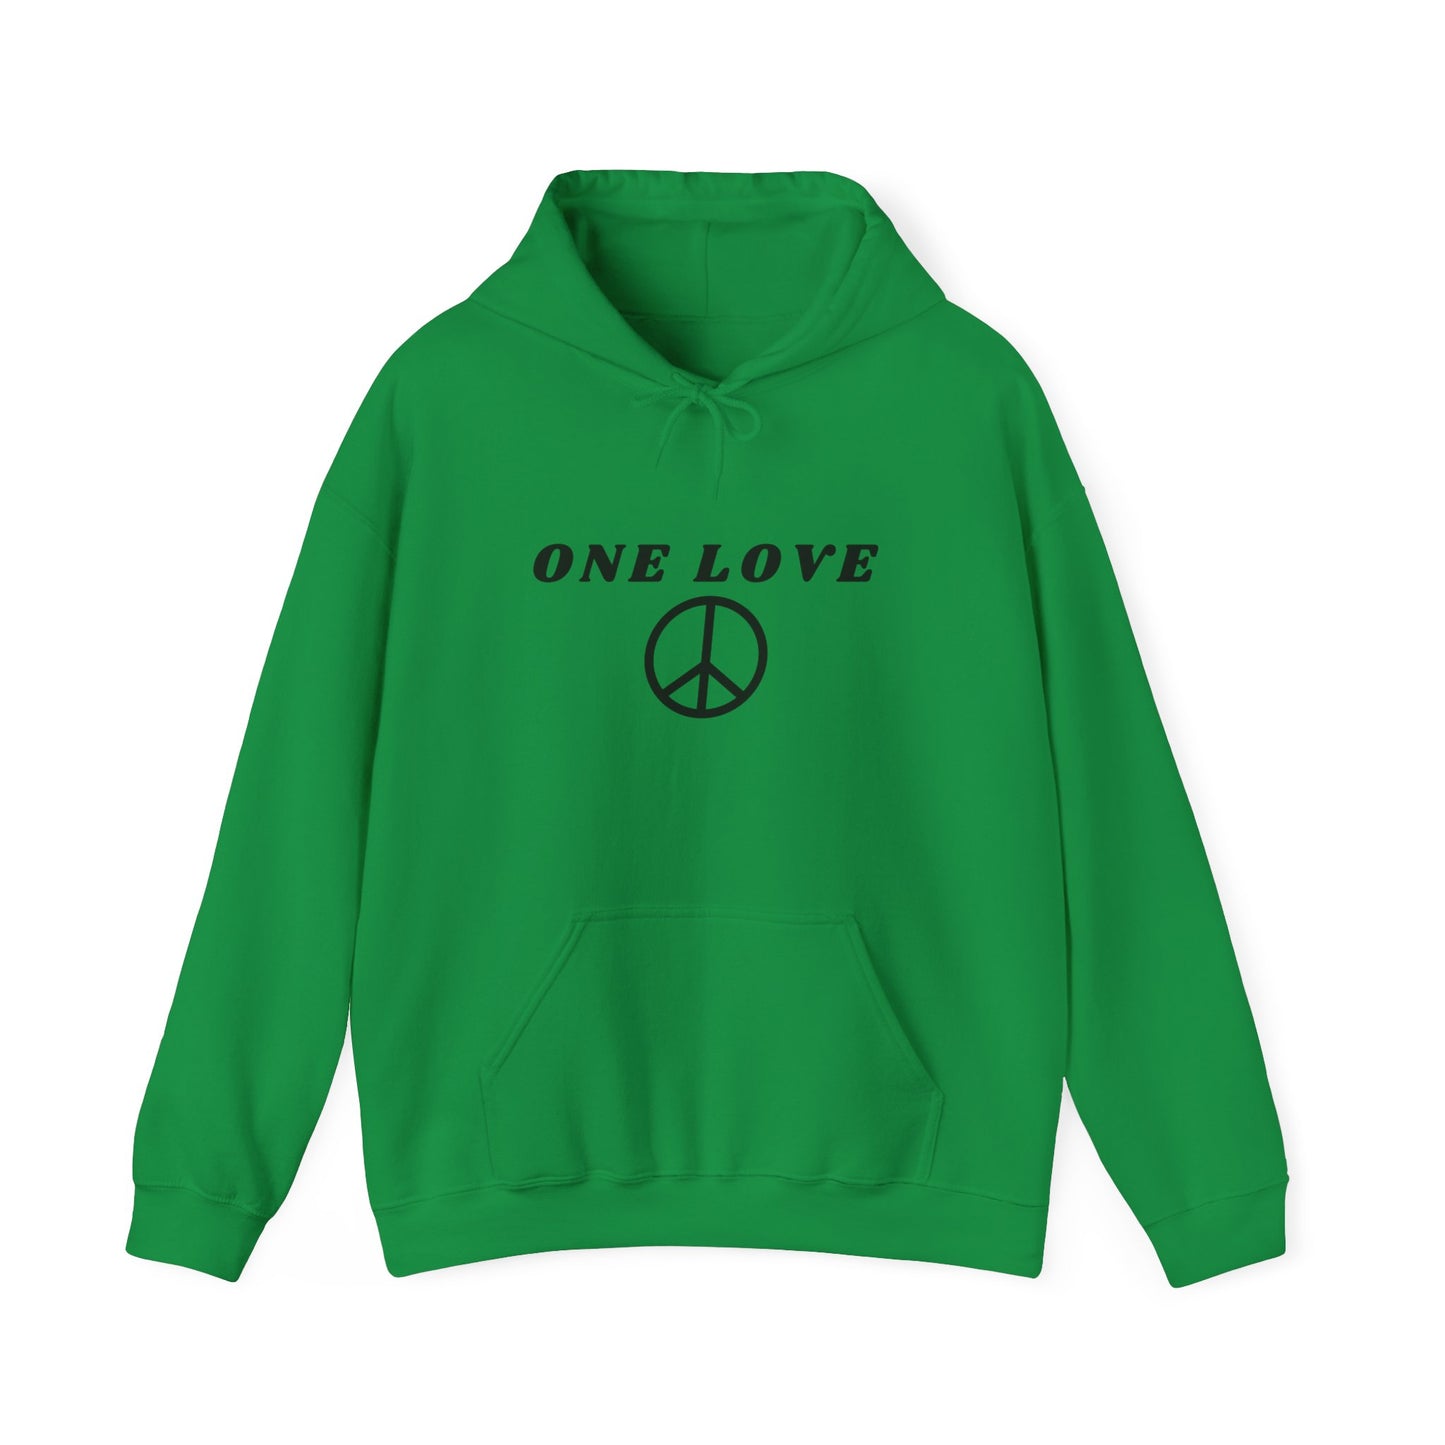 ONE LOVE PEACE HOODIE GIFT